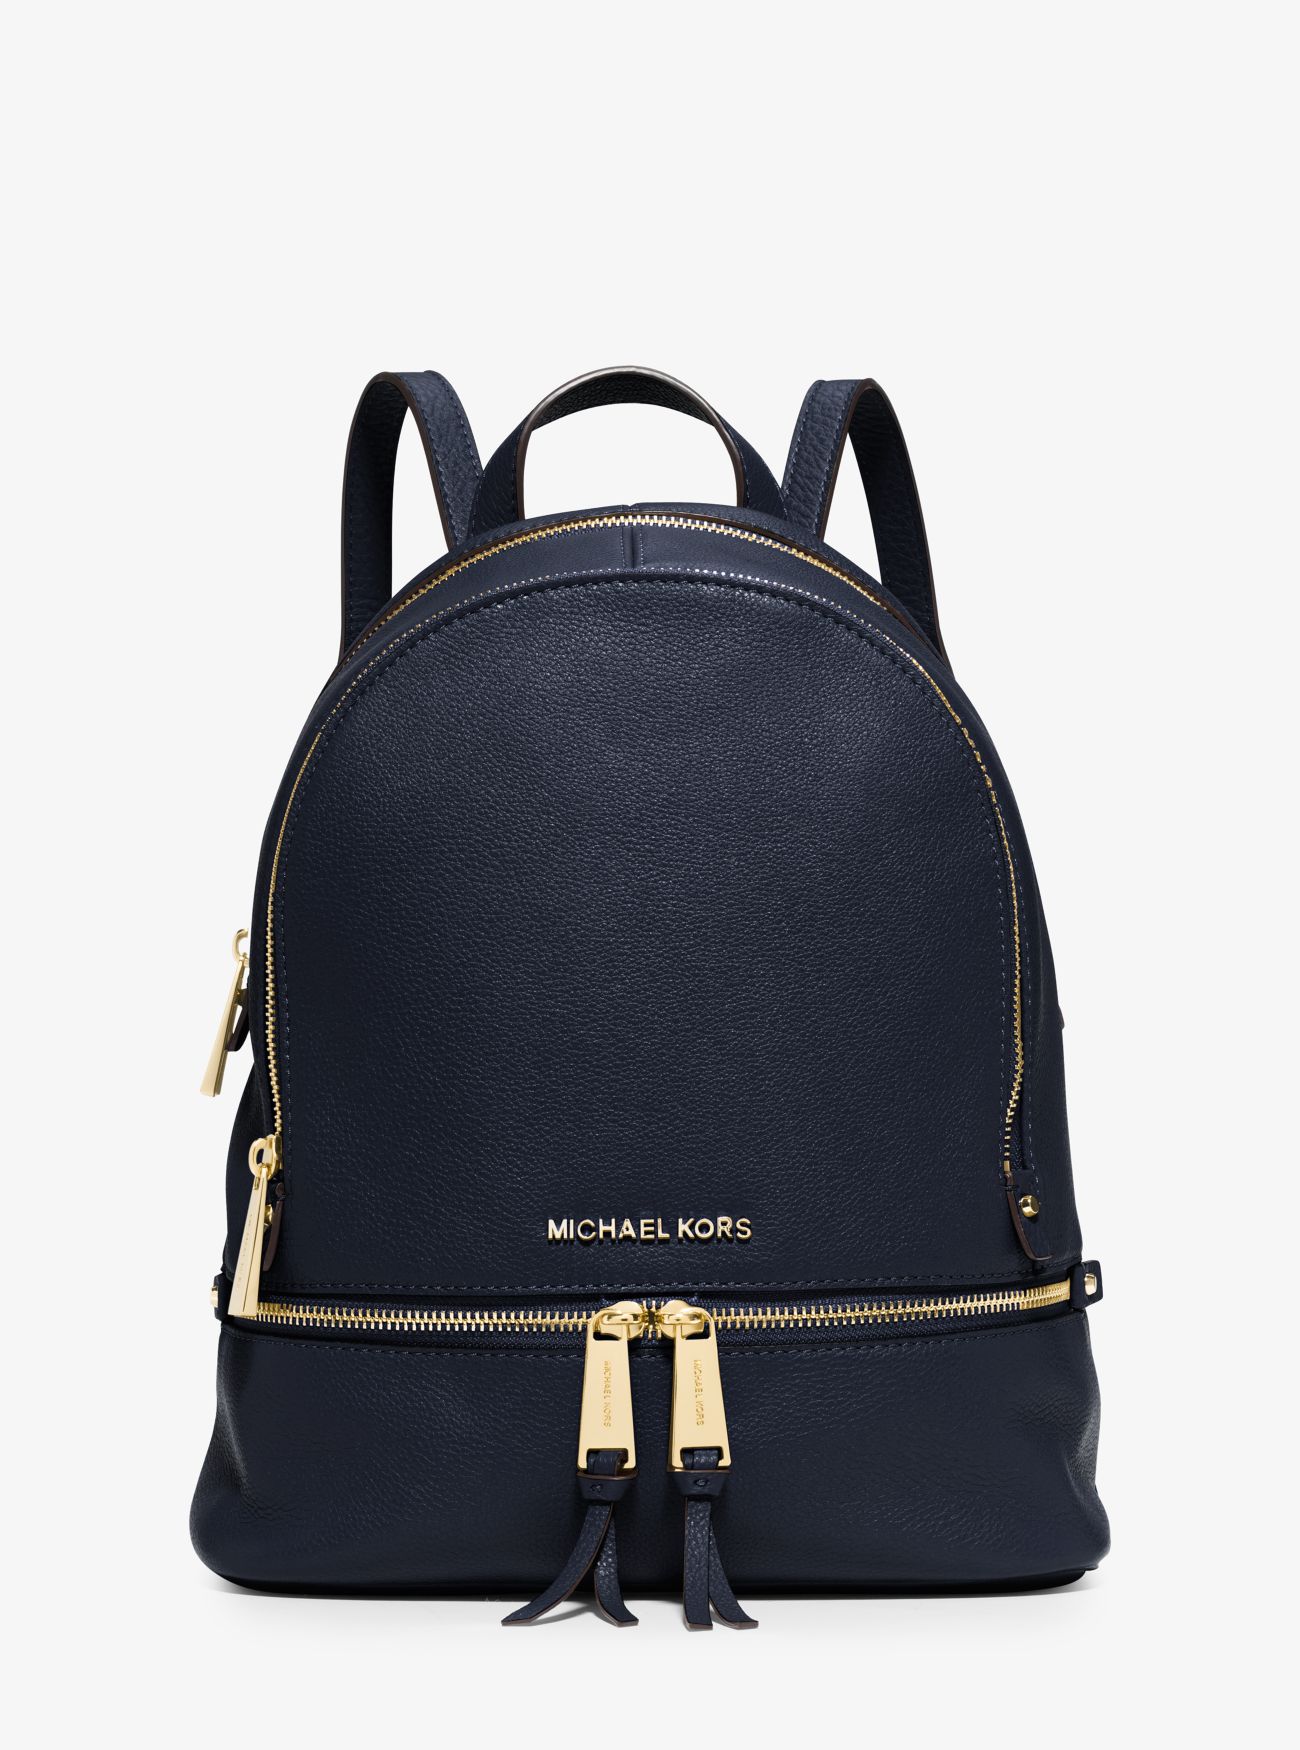 MK Rhea Medium Leather Backpack - Blue - Michael Kors